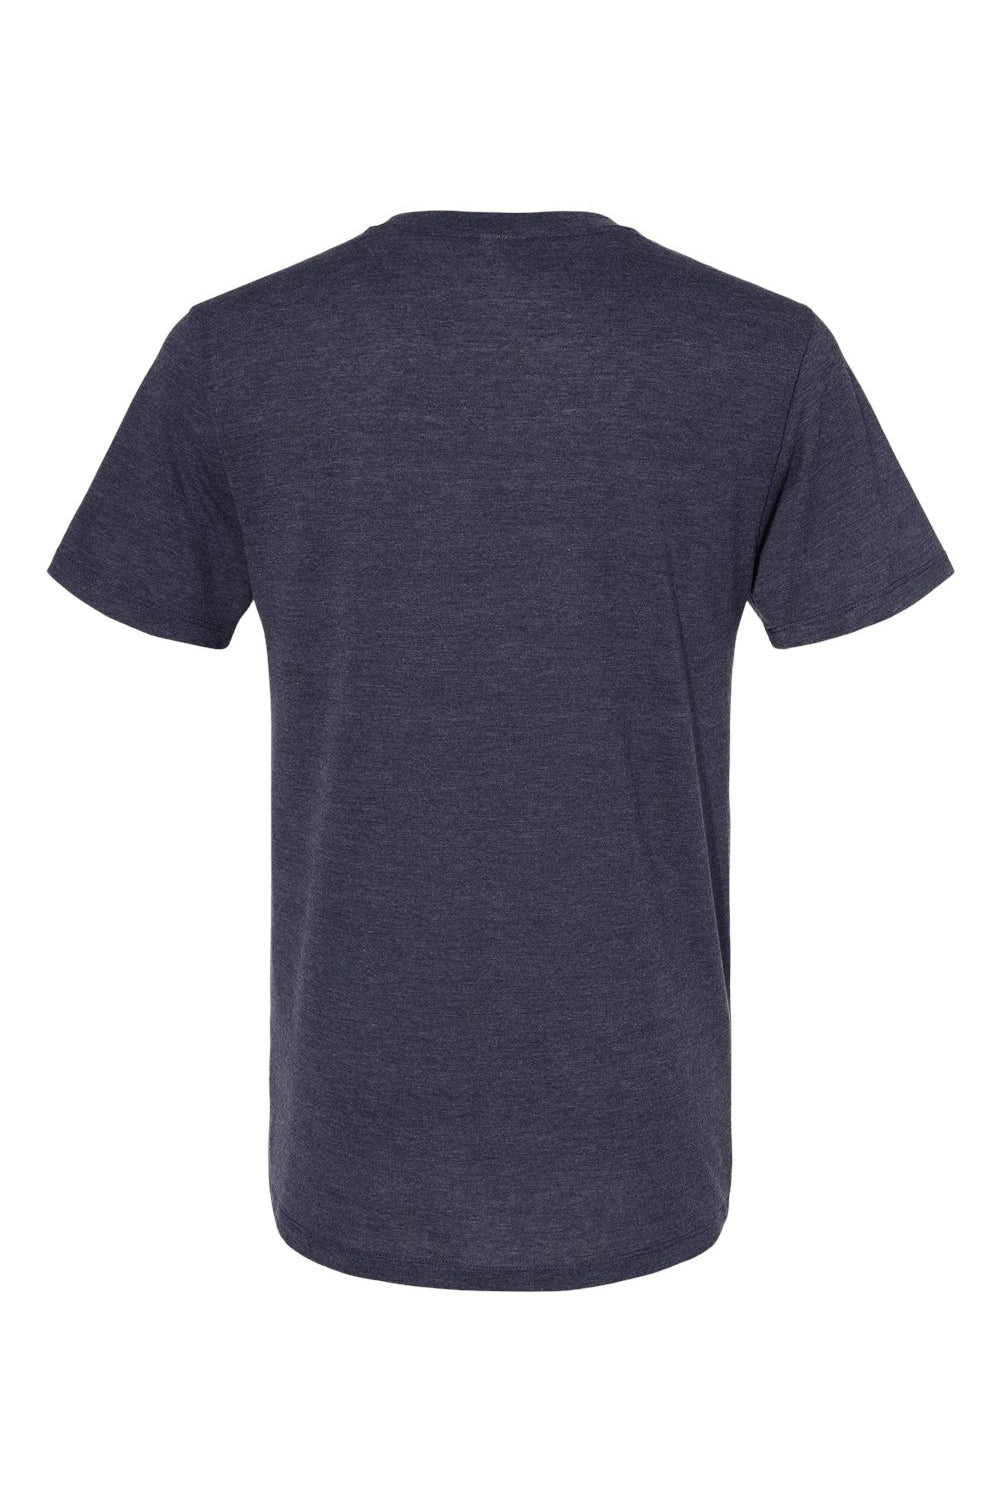 Augusta Sportswear 3065 Mens Short Sleeve Crewneck T-Shirt Heather Navy Blue Flat Back